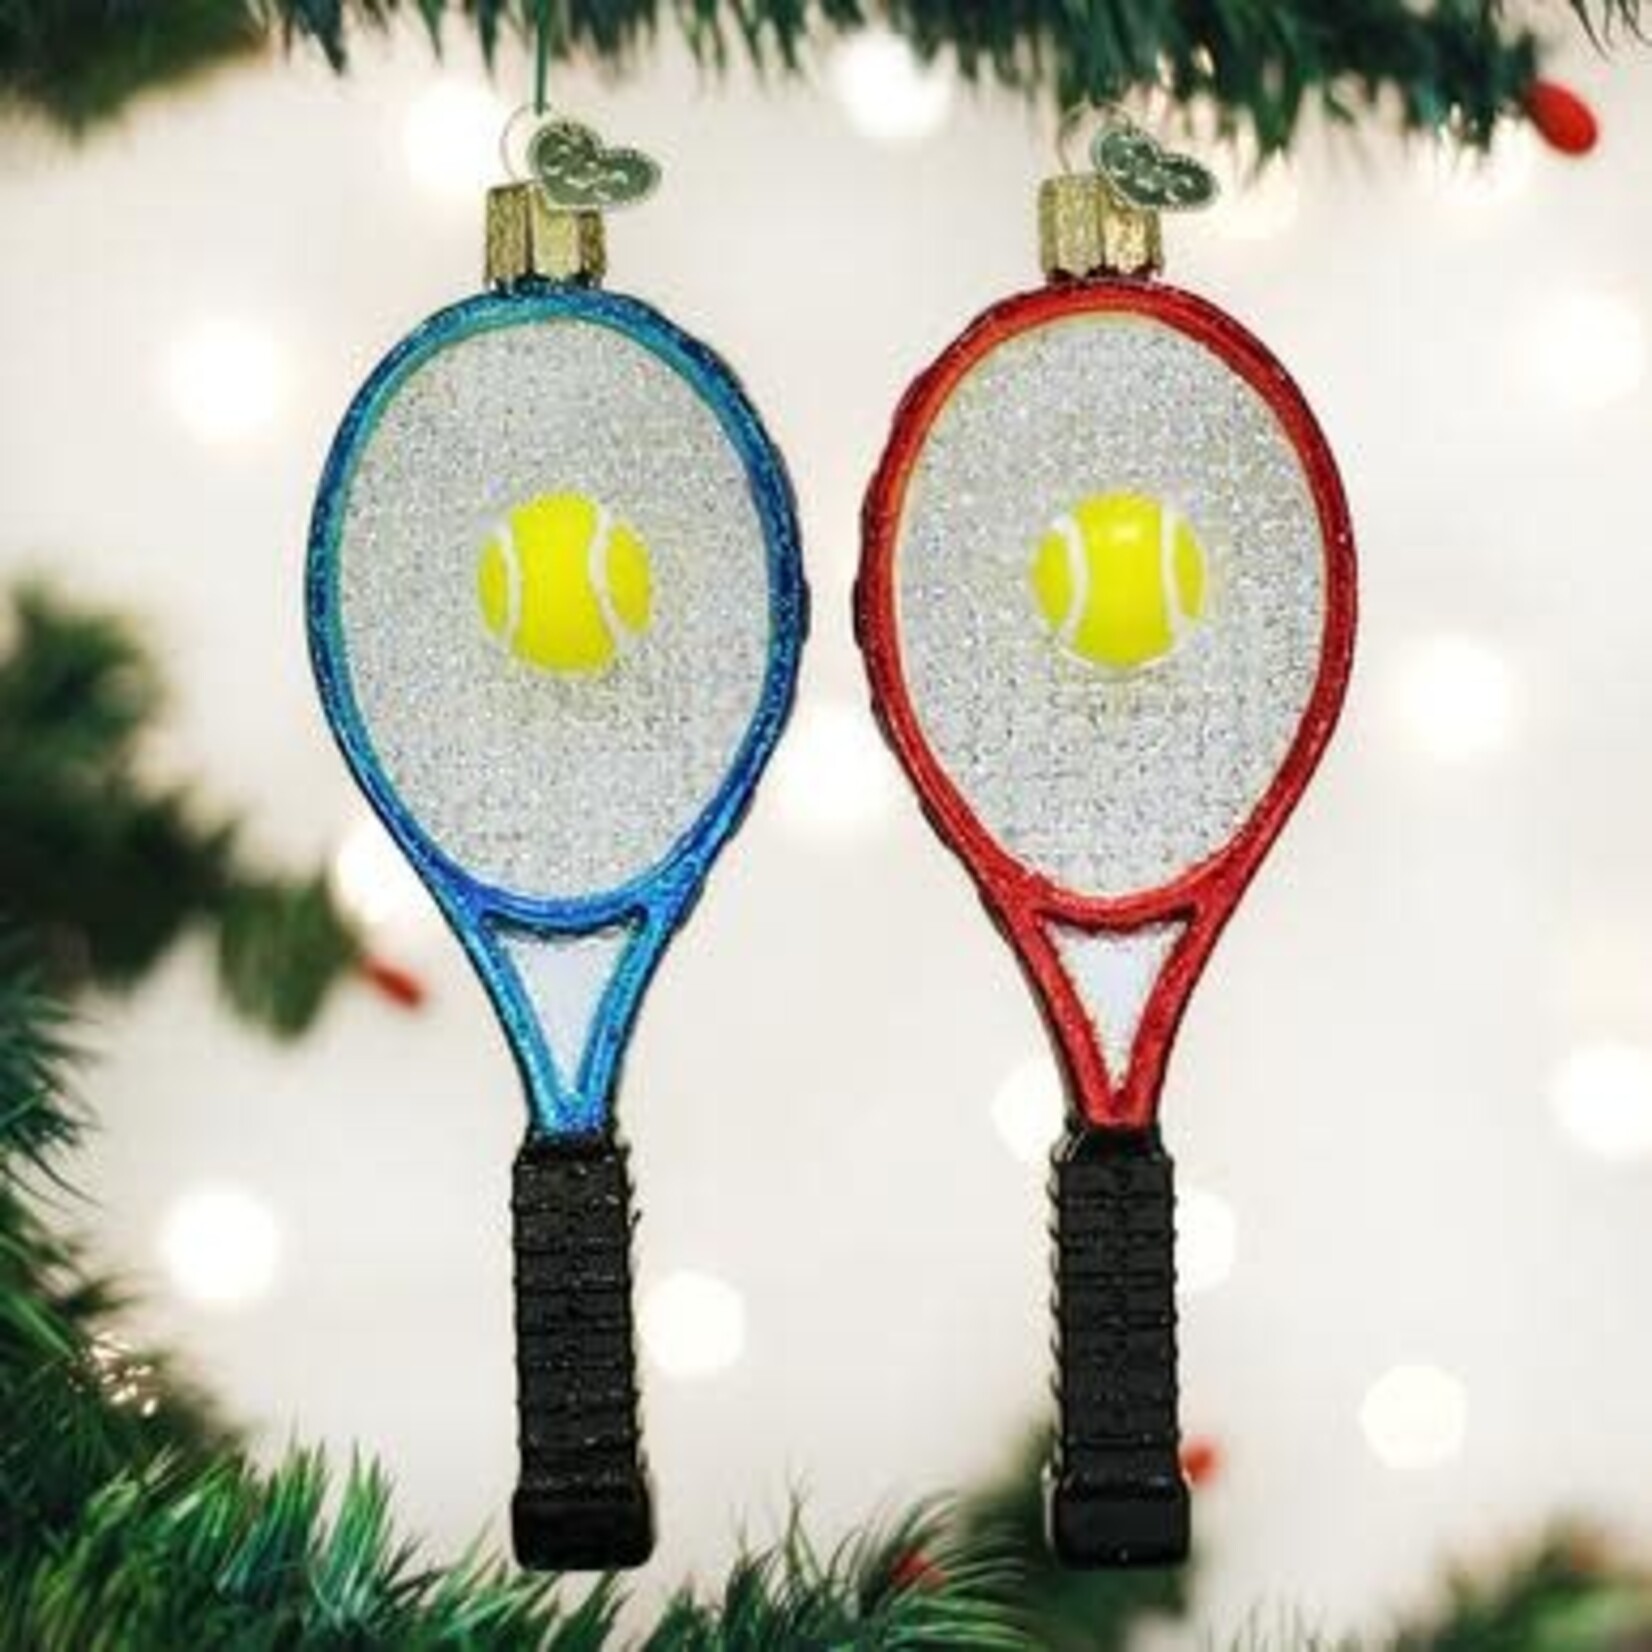 Old World Christmas Tennis Racquet Ornament